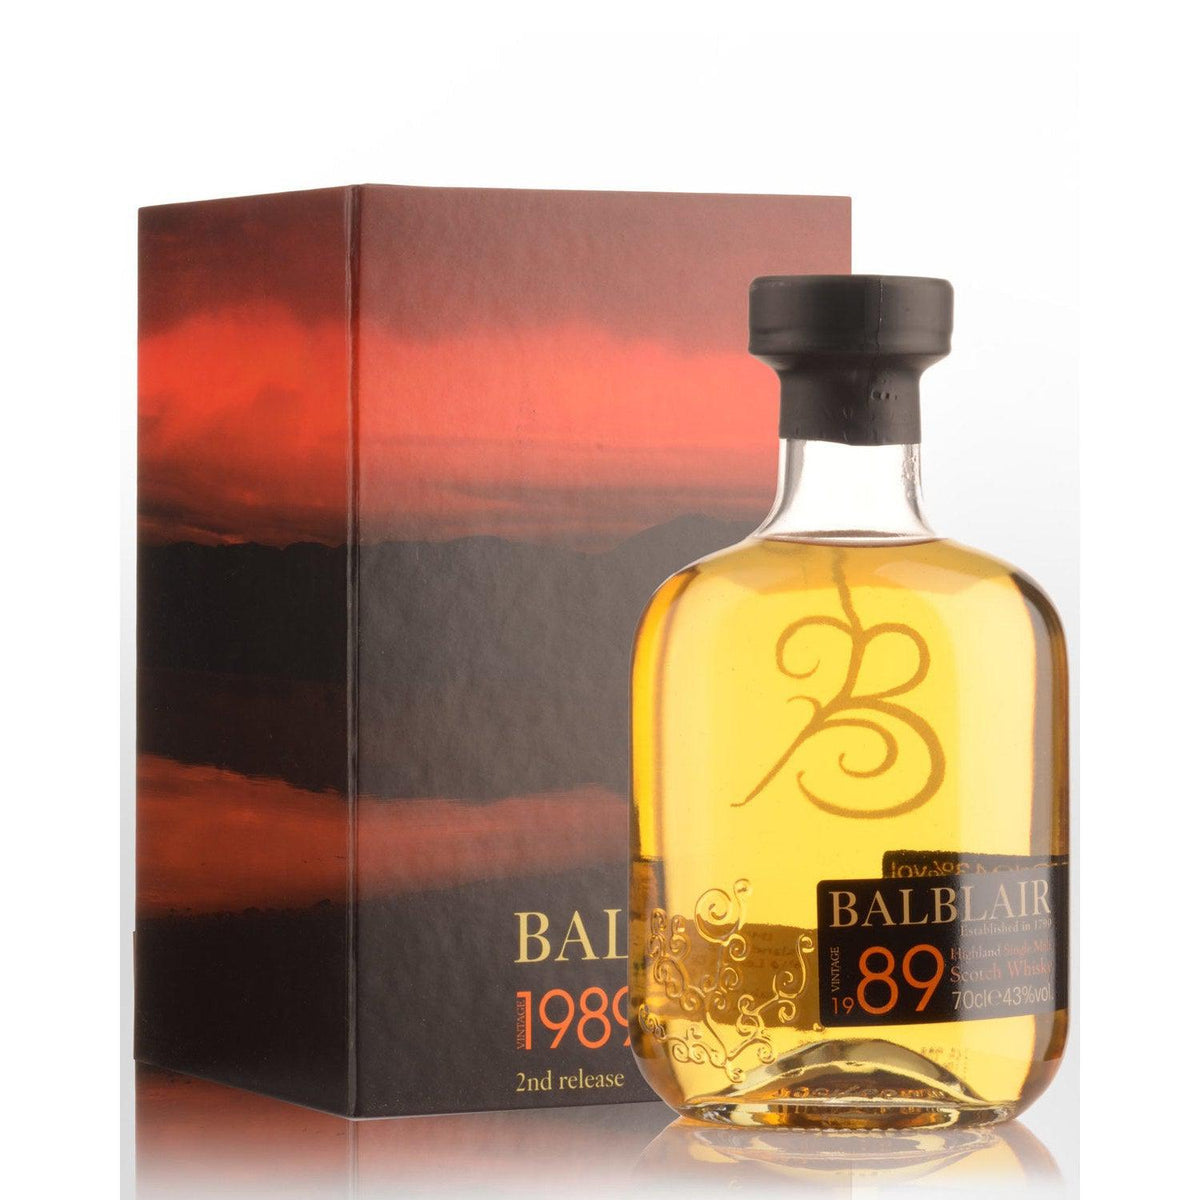 1989 (2nd Release) Balblair Single Malt Scotch Whisky 700ml